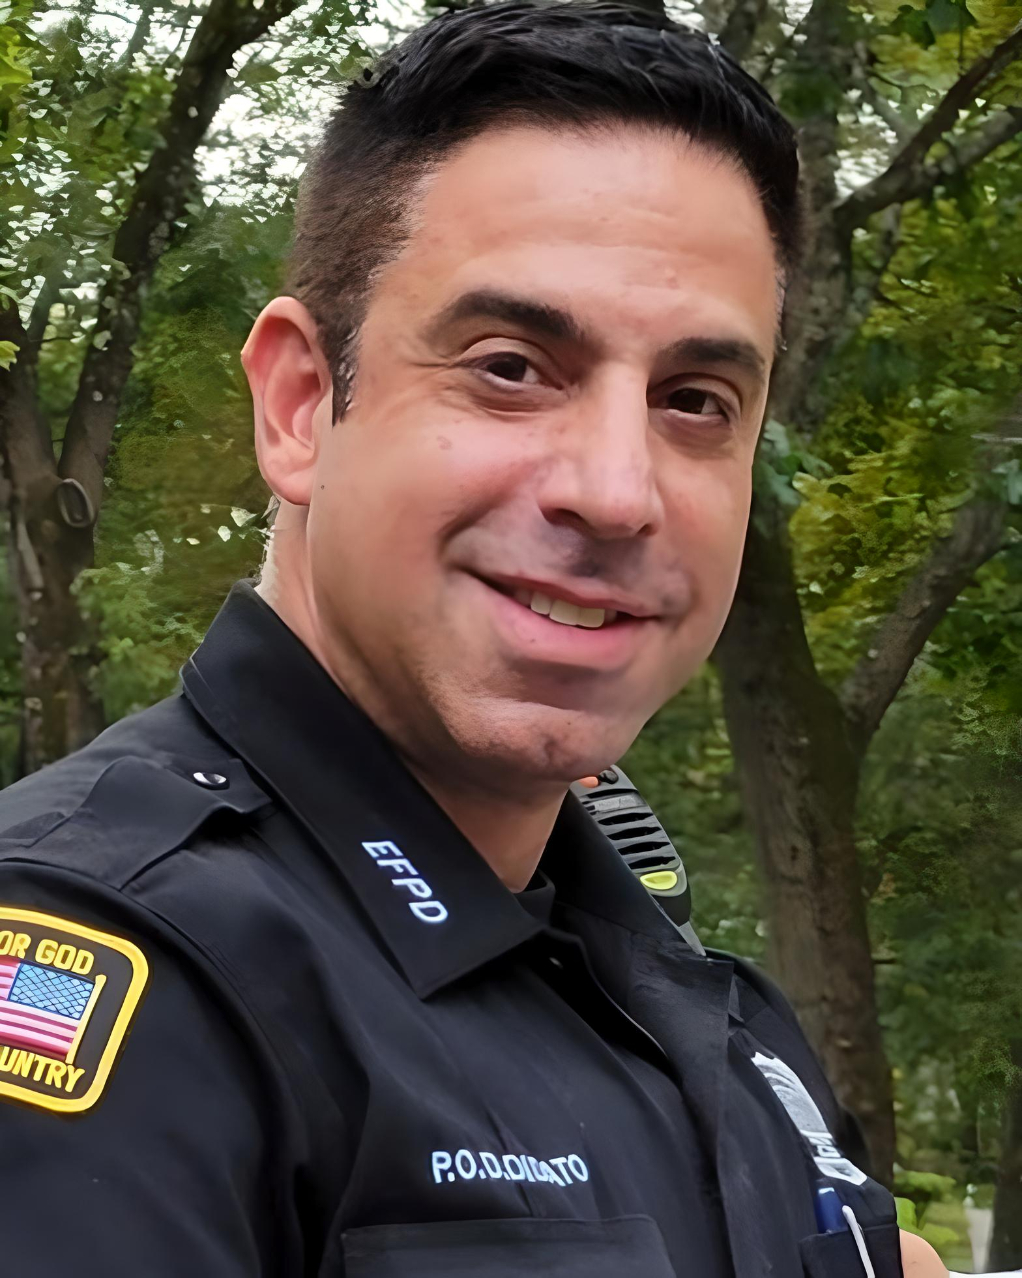 Police Officer Daniel P. DiDato